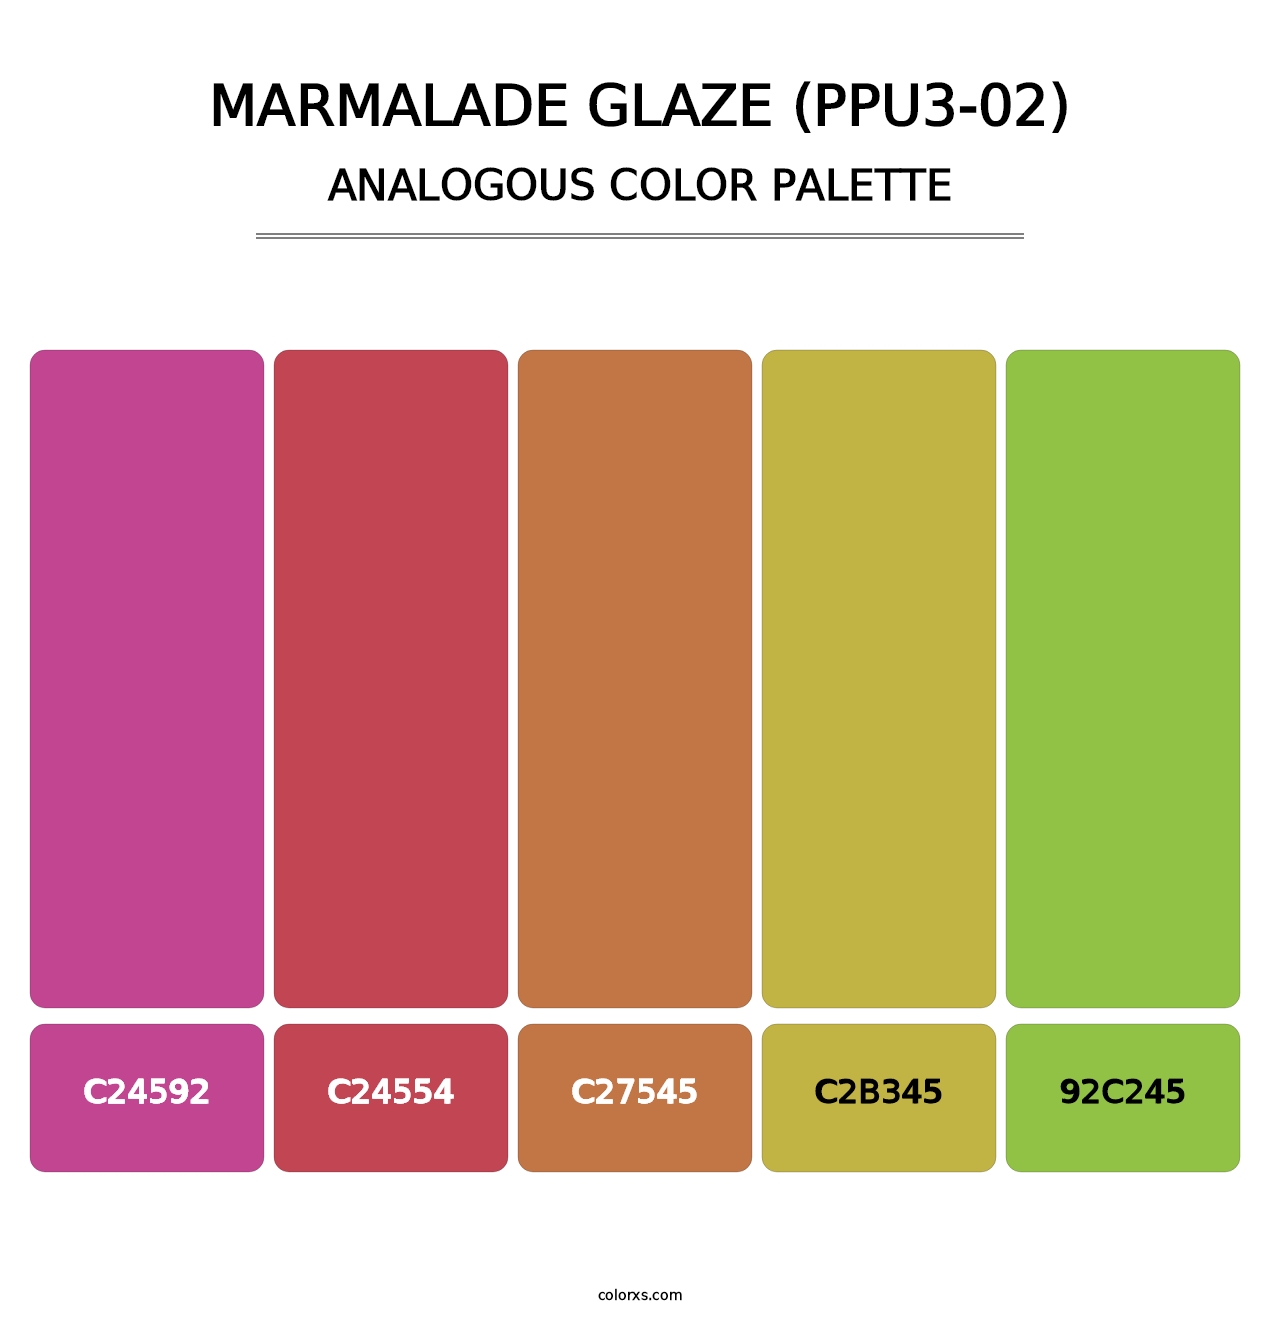 Marmalade Glaze (PPU3-02) - Analogous Color Palette